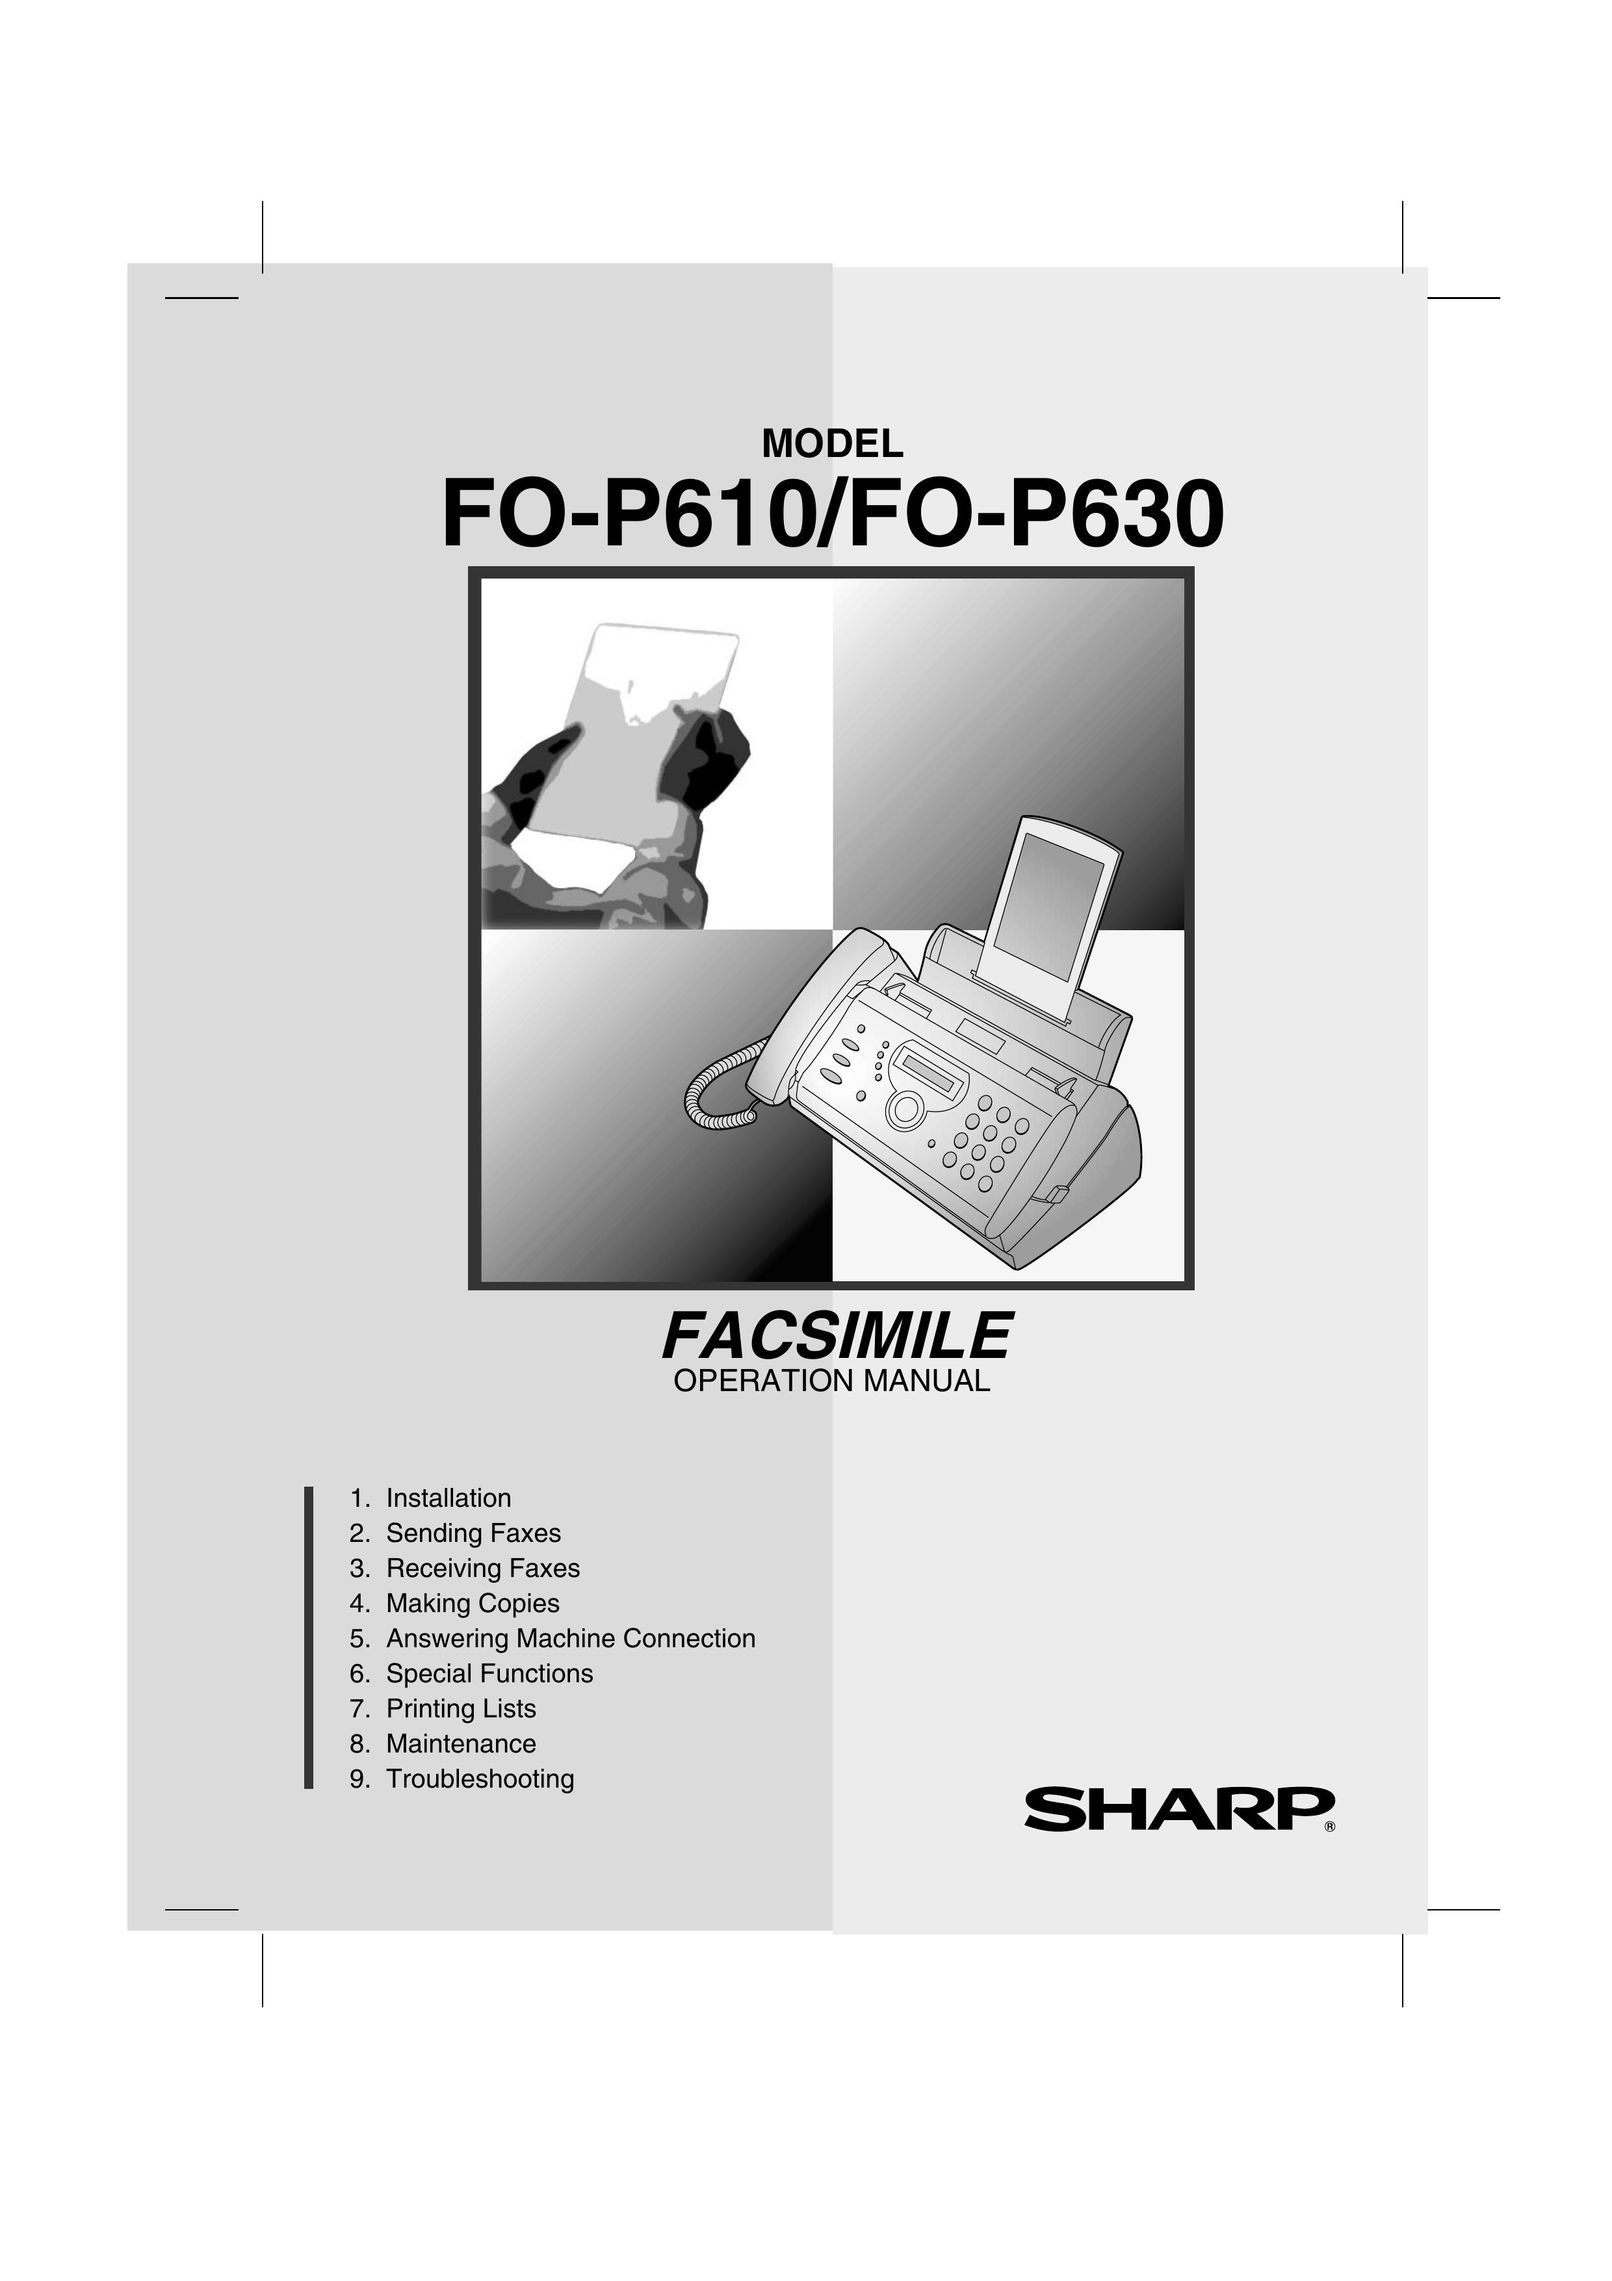 Sharp FO-P610/FO-P630 Fax Machine User Manual